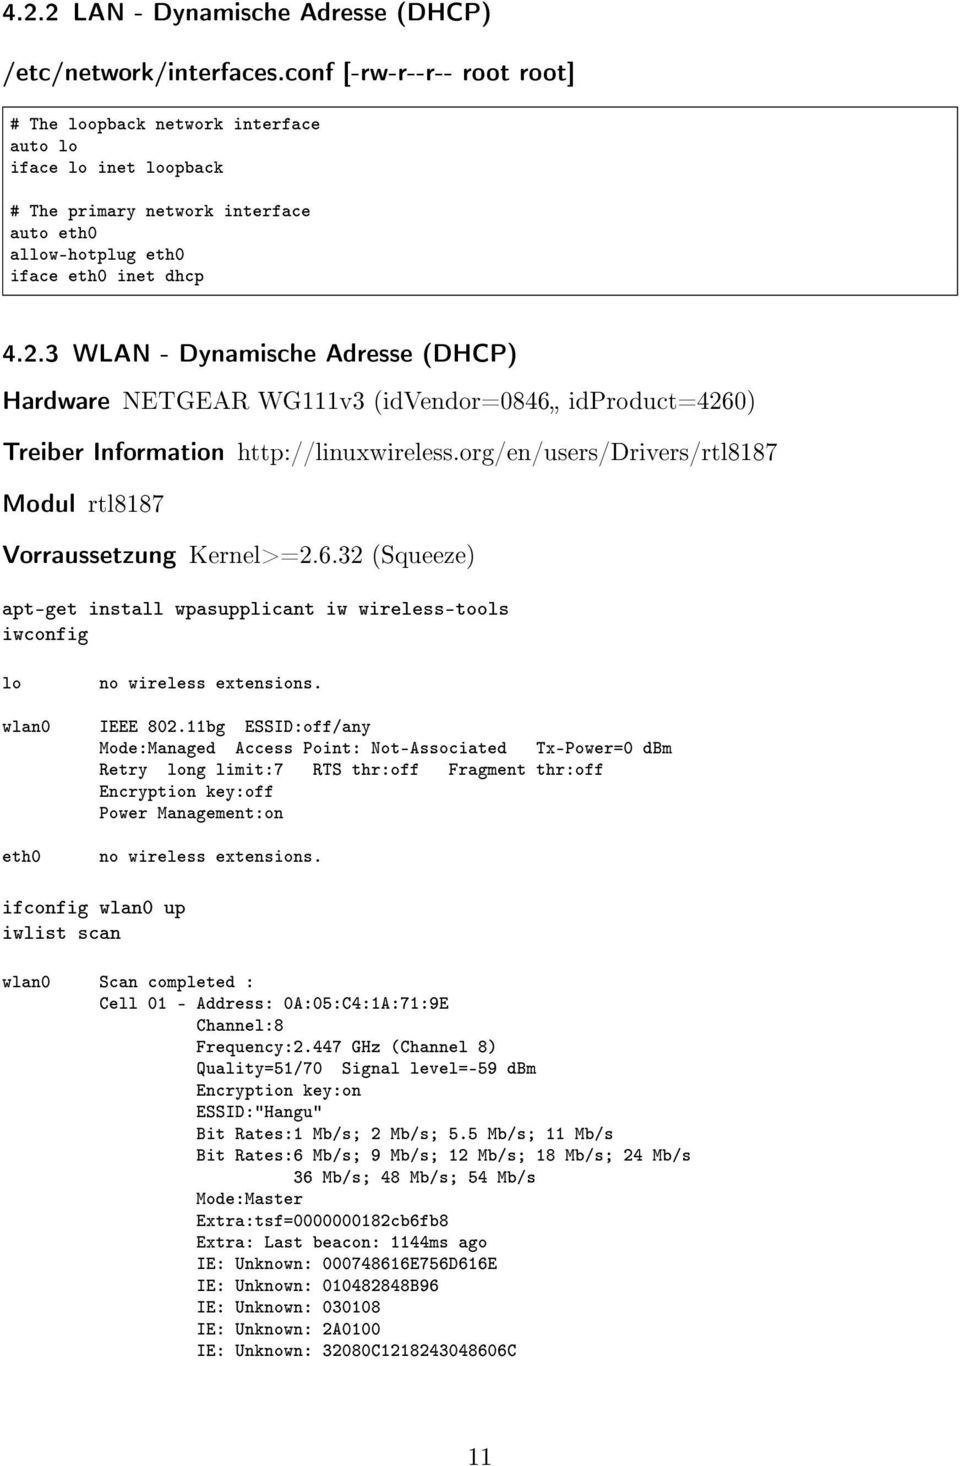 3 WLAN - Dynamische Adresse (DHCP) Hardware NETGEAR WG111v3 (idvendor=0846 idproduct=4260) Treiber Information http://linuxwireless.org/en/users/drivers/rtl8187 Modul rtl8187 Vorraussetzung Kernel>=2.